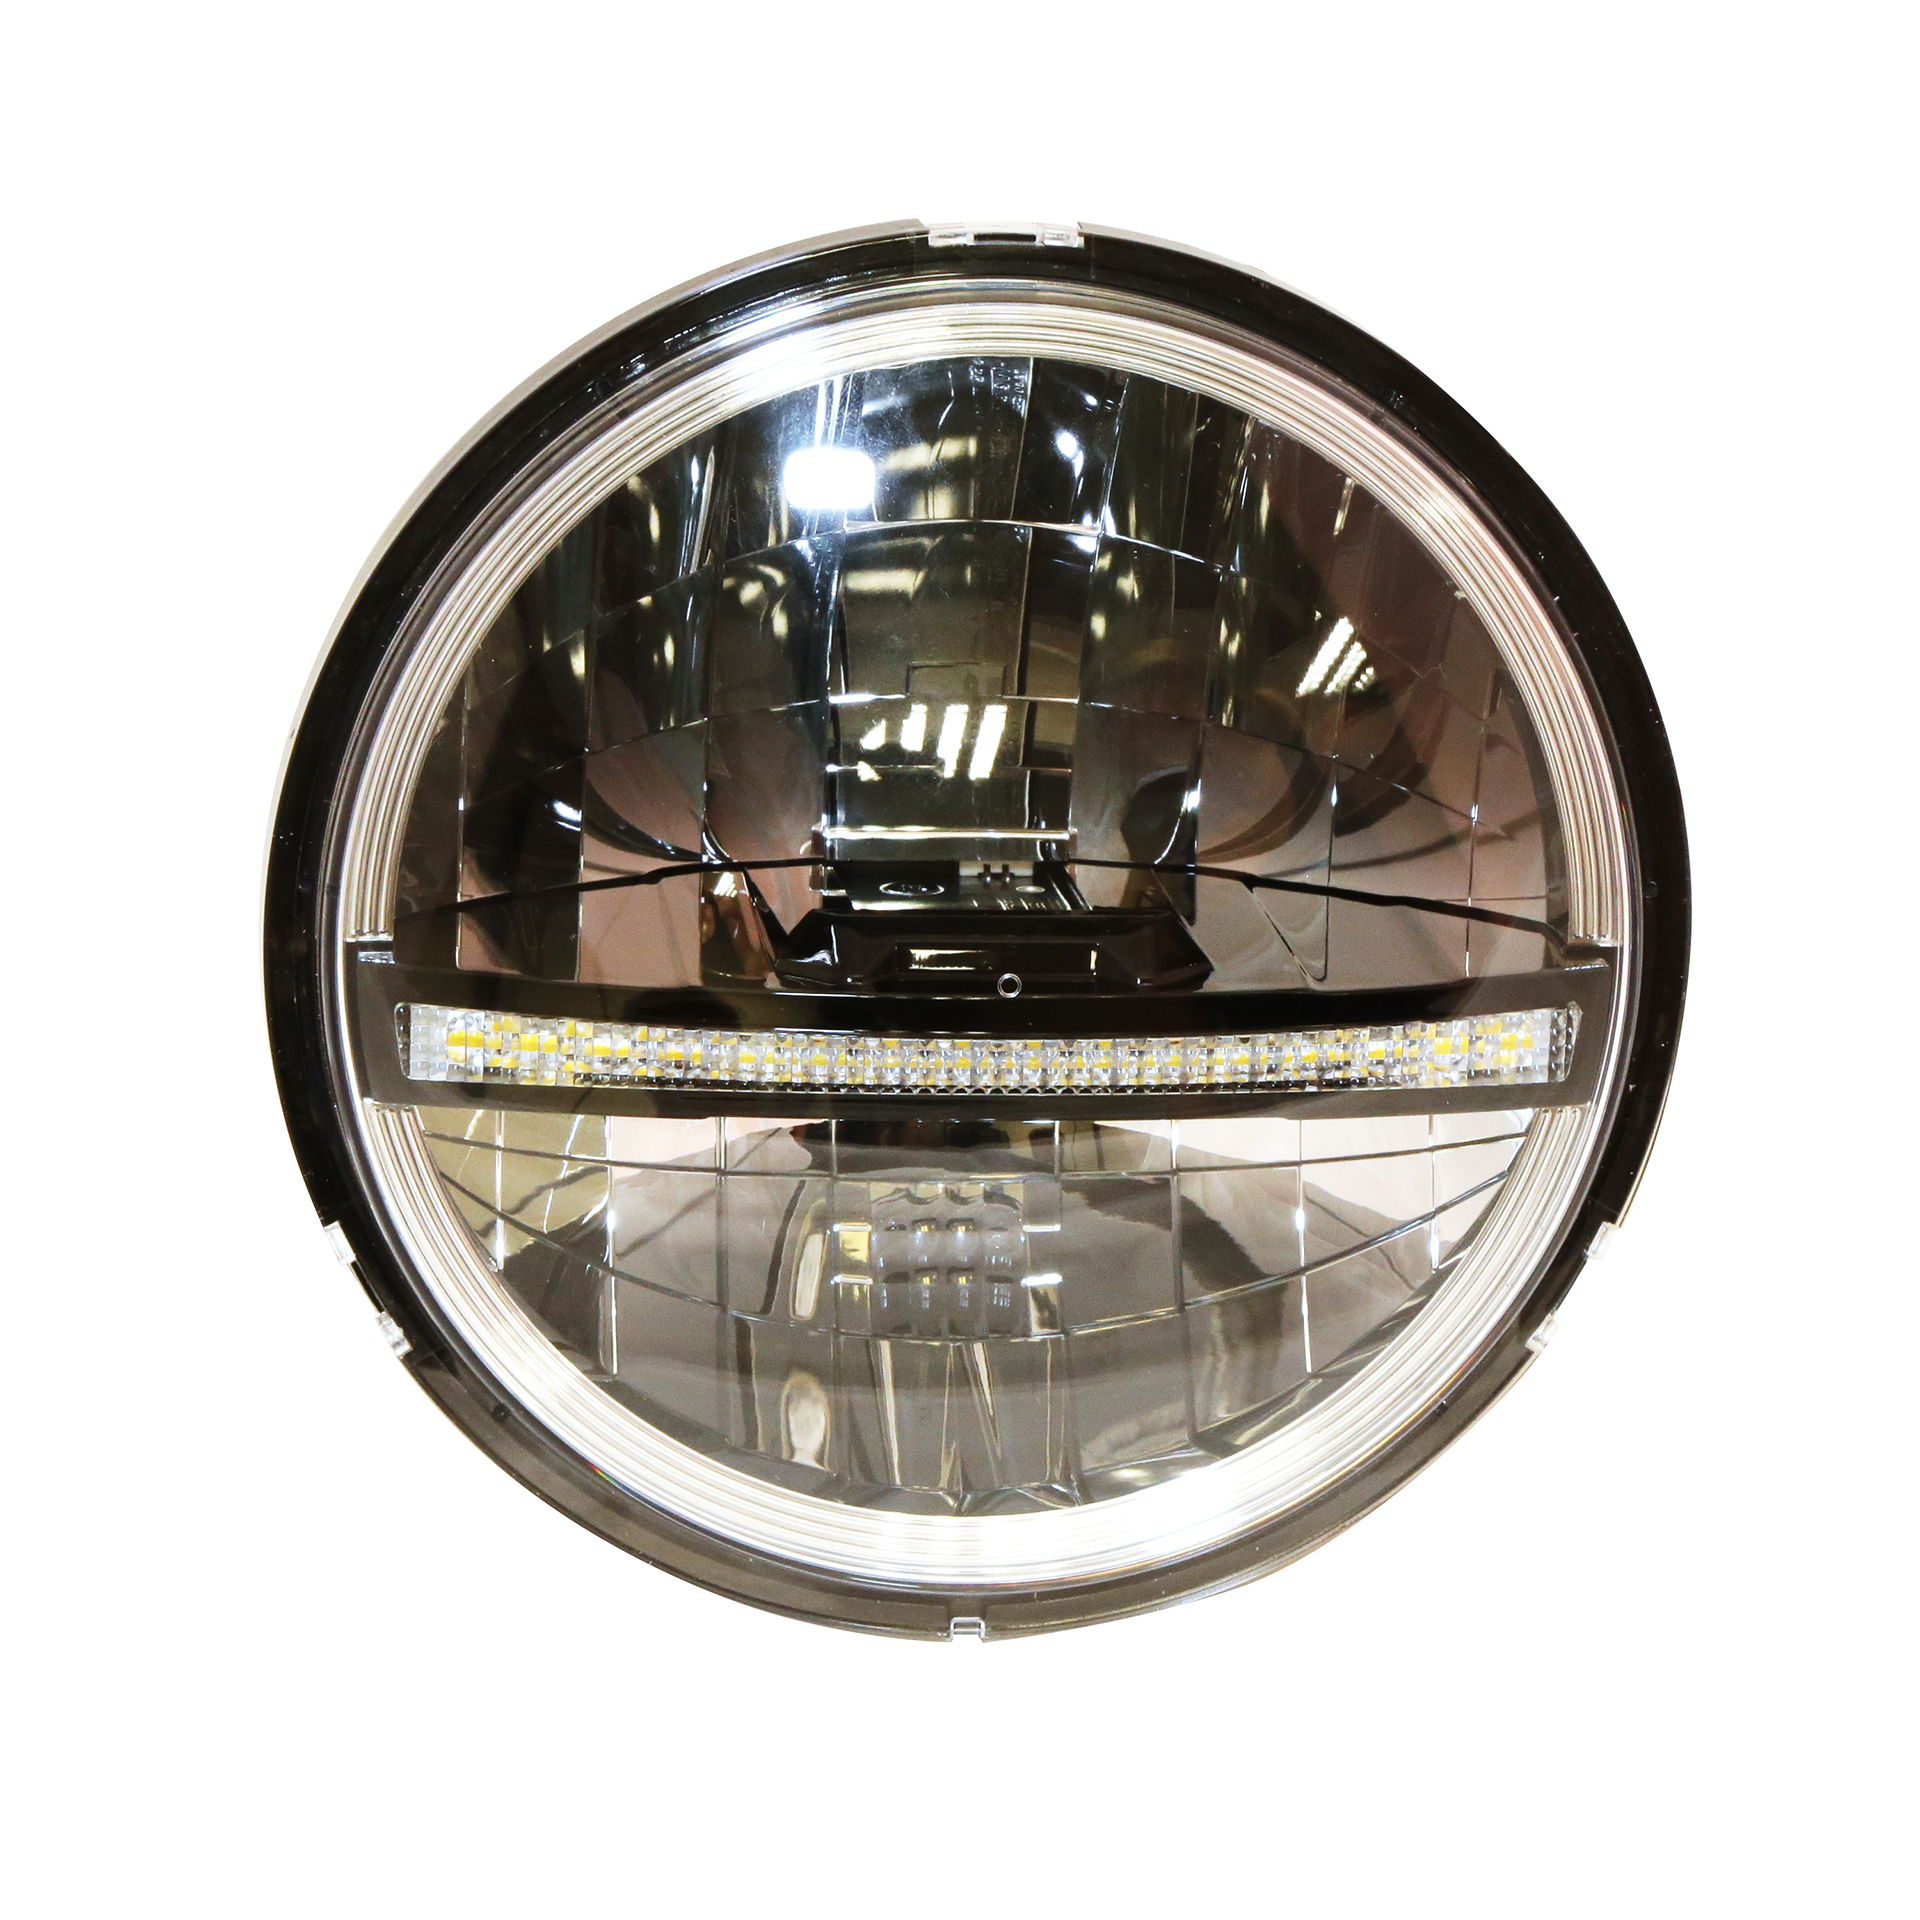 highsider TYPE 12 LED headlight insert with TFL, round, 5 3/4 inch